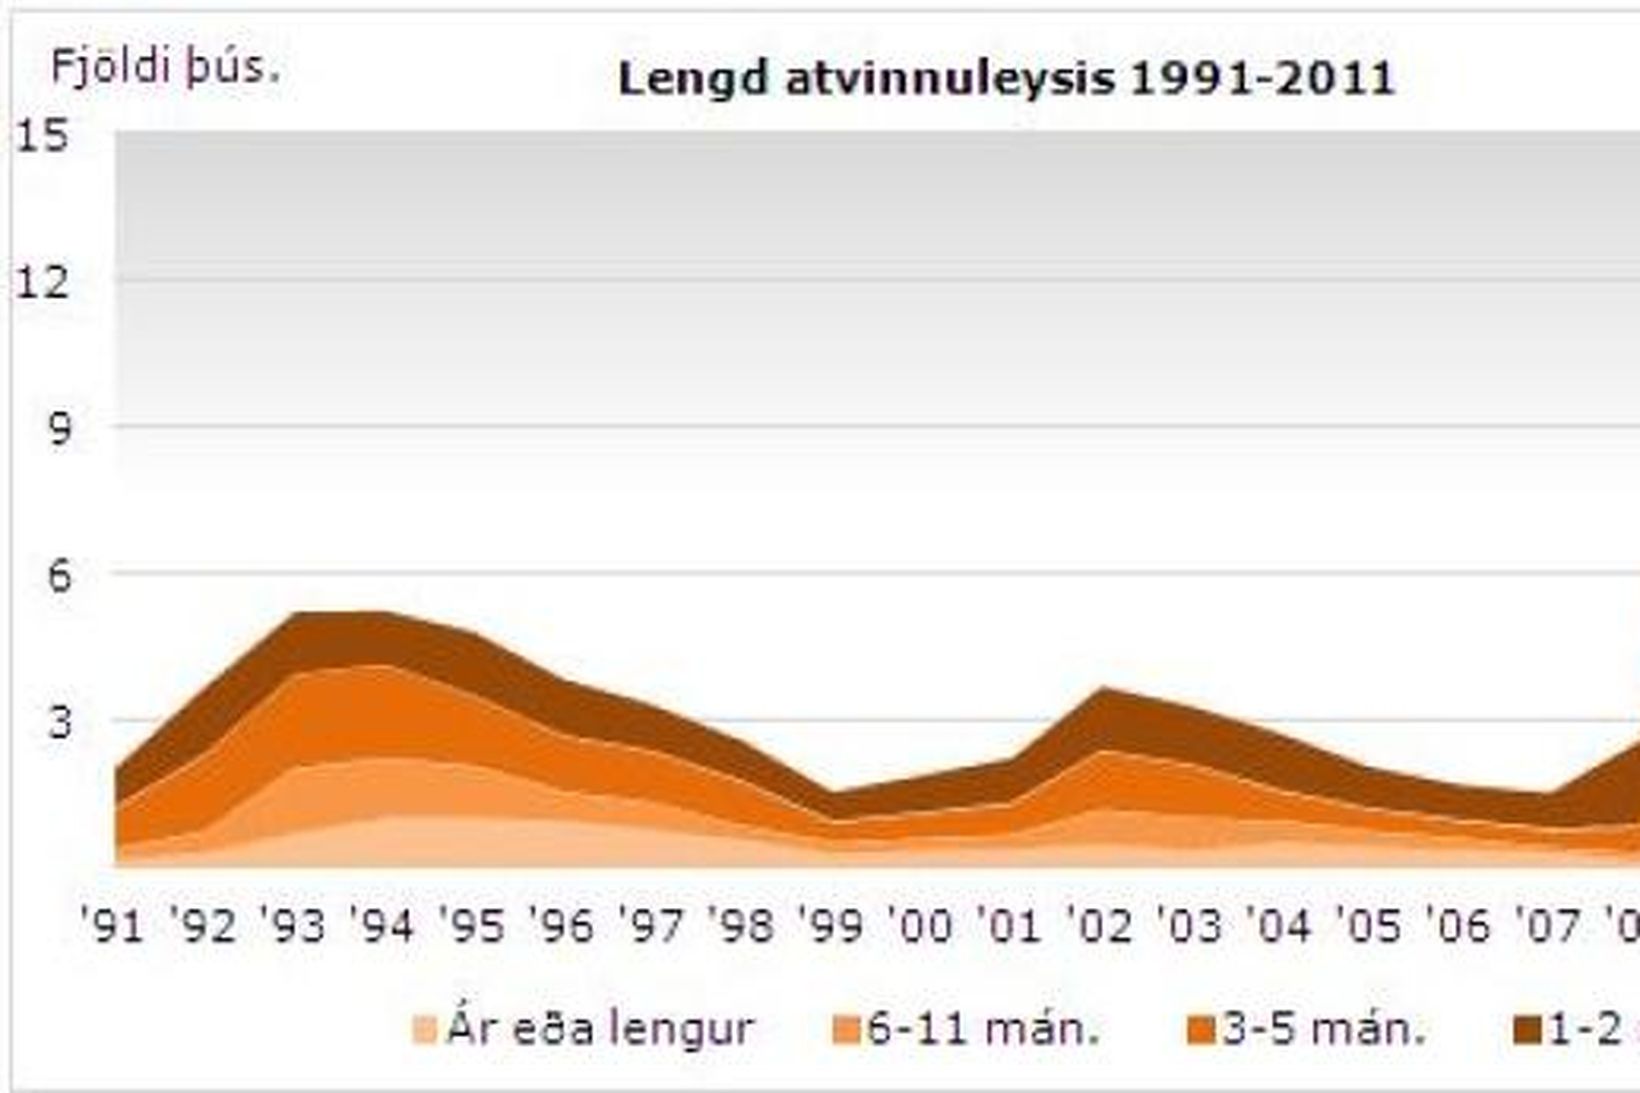 Lengd atvinnuleysis 1991 - 2011.